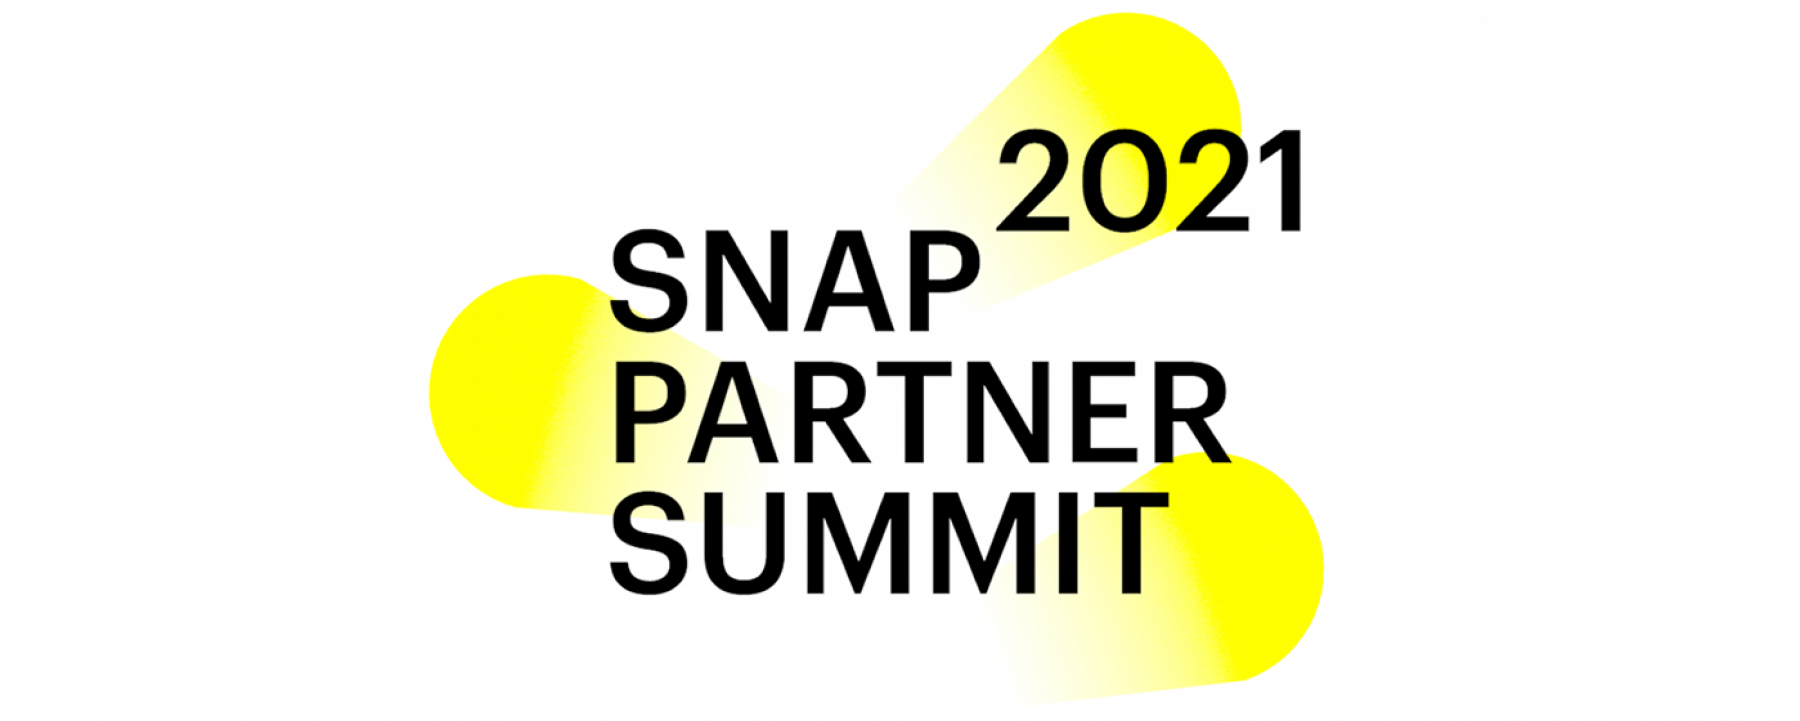 Snap Partner Summit 2021, organisé par Snapchat le 20 mai 2021